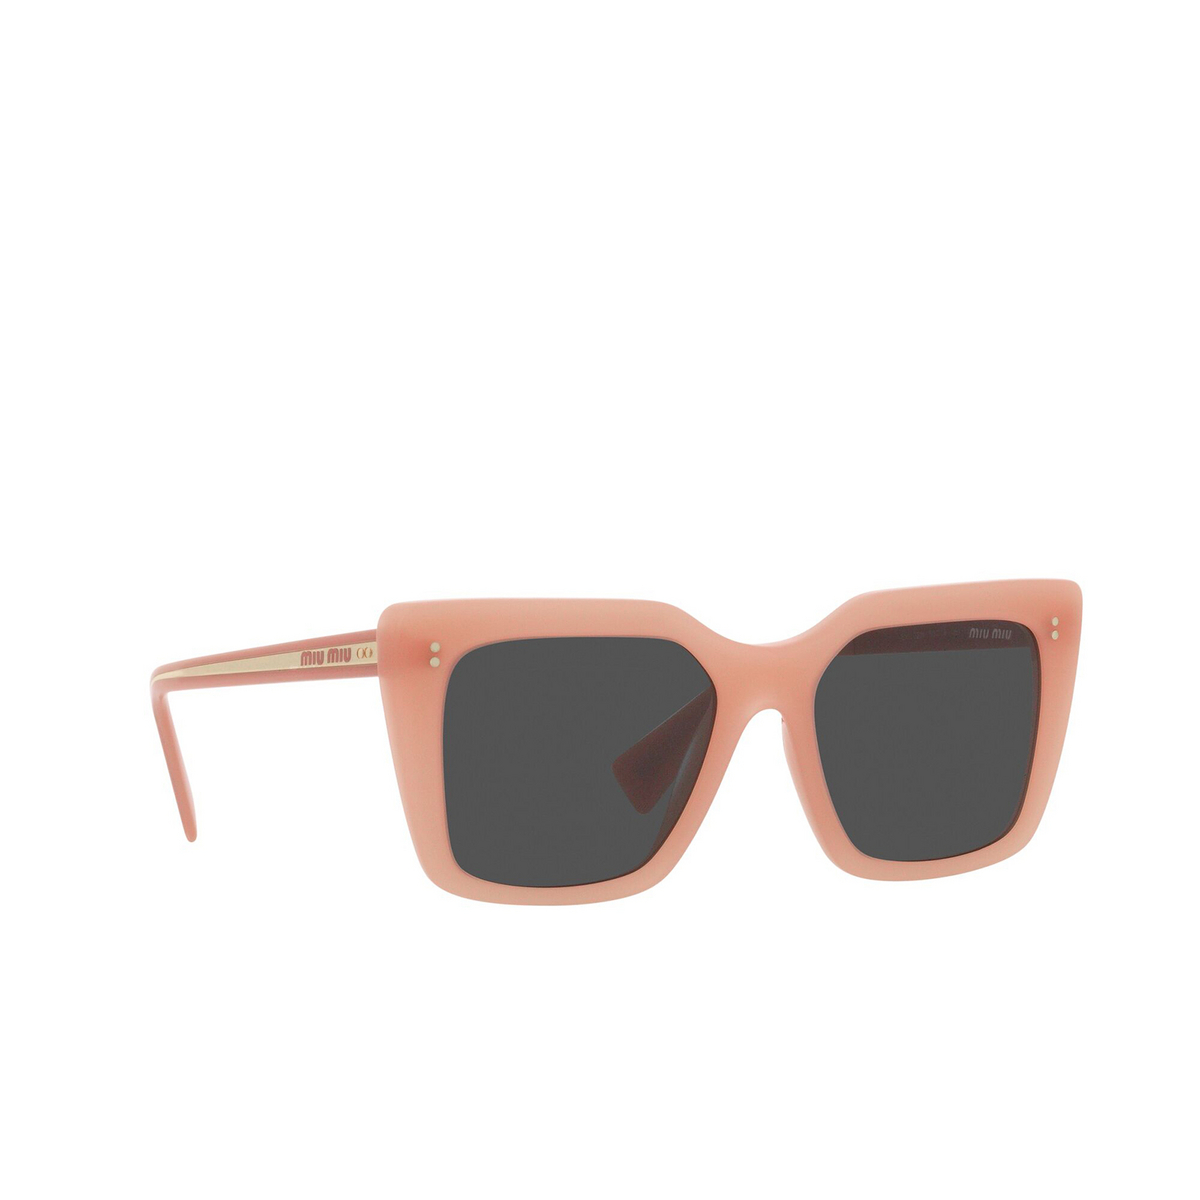 Miu Miu® Square Sunglasses: MU 02WS color Pink Opal 06X5S0 - three-quarters view.